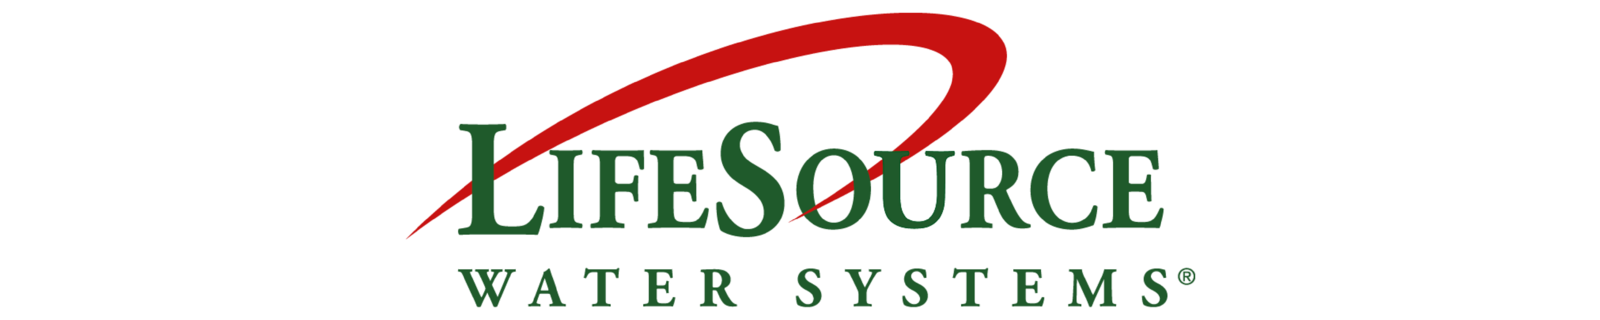 lifesource_logo